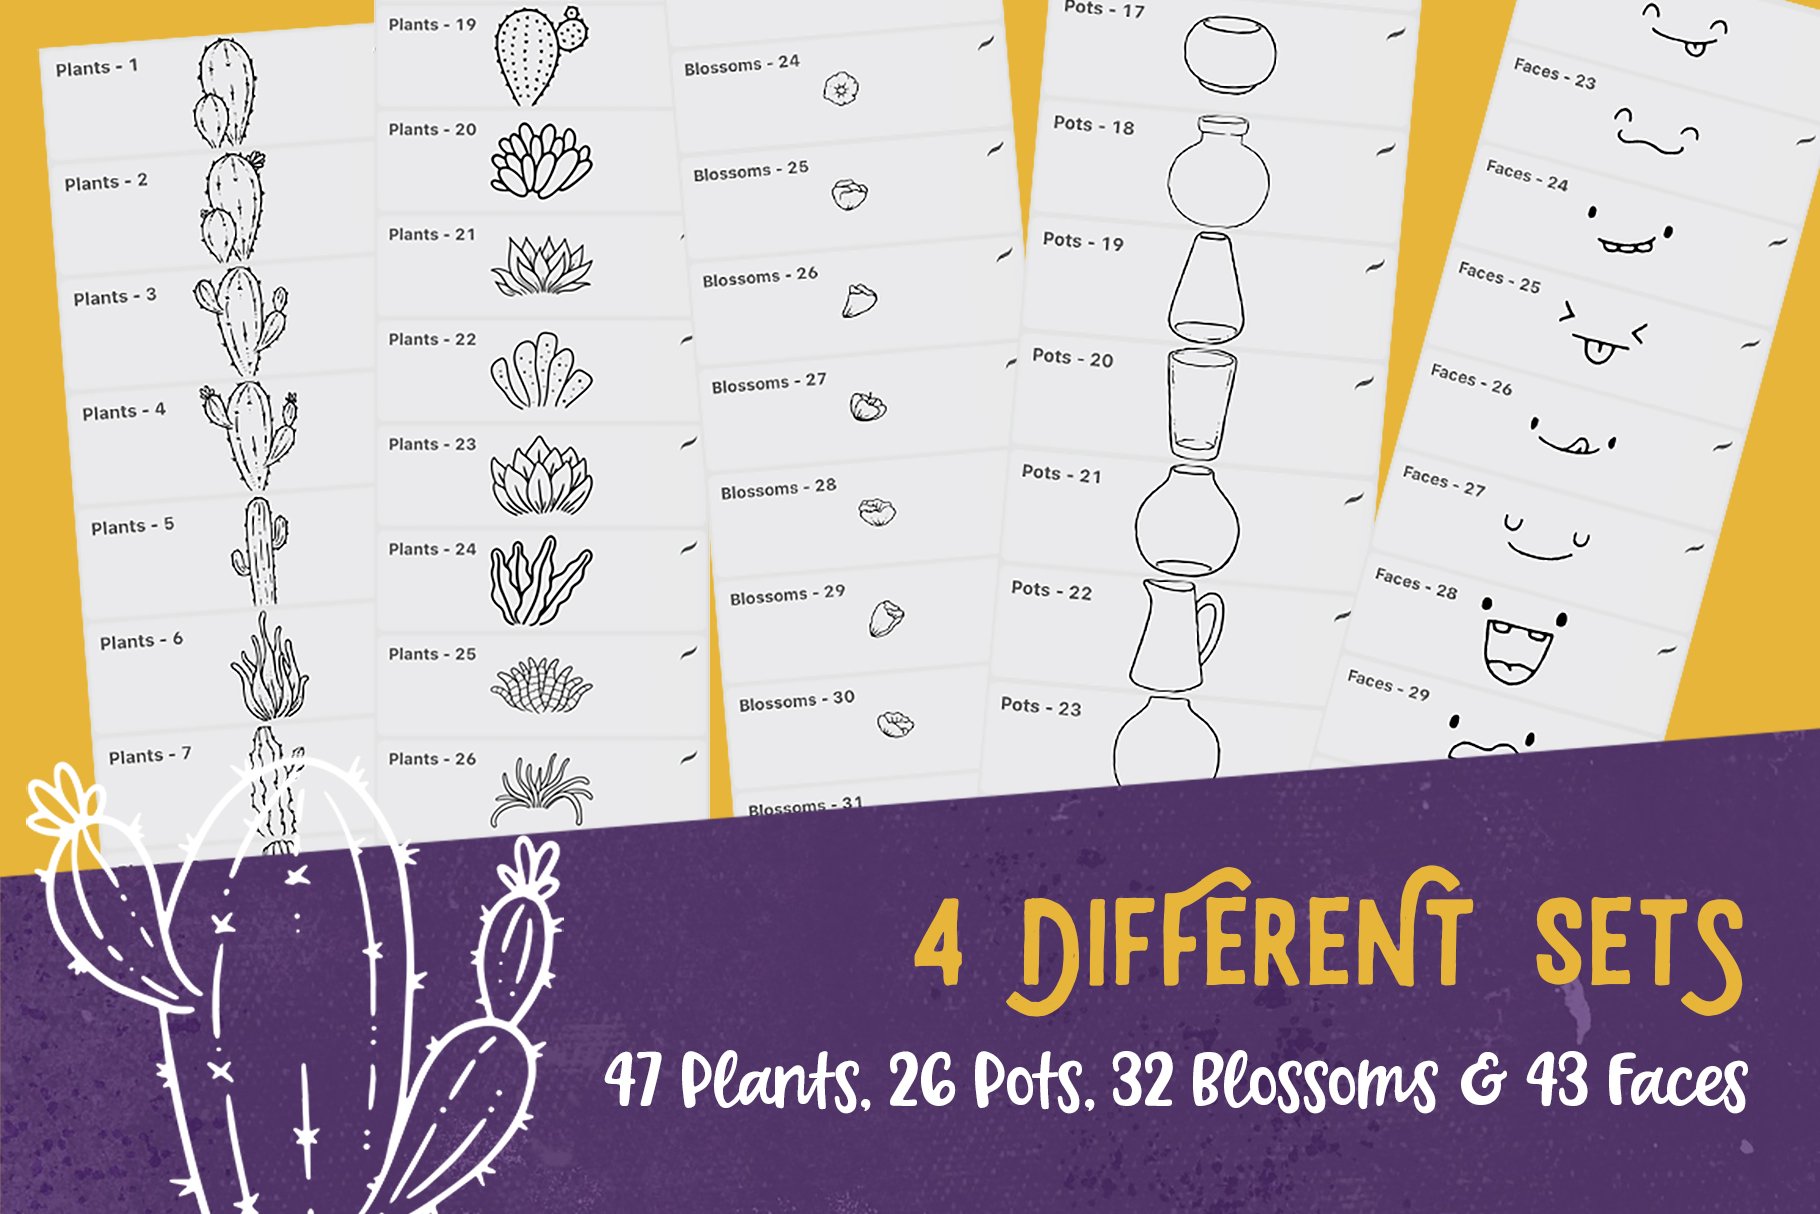 Procreate Plants & Pots Stamp Setpreview image.